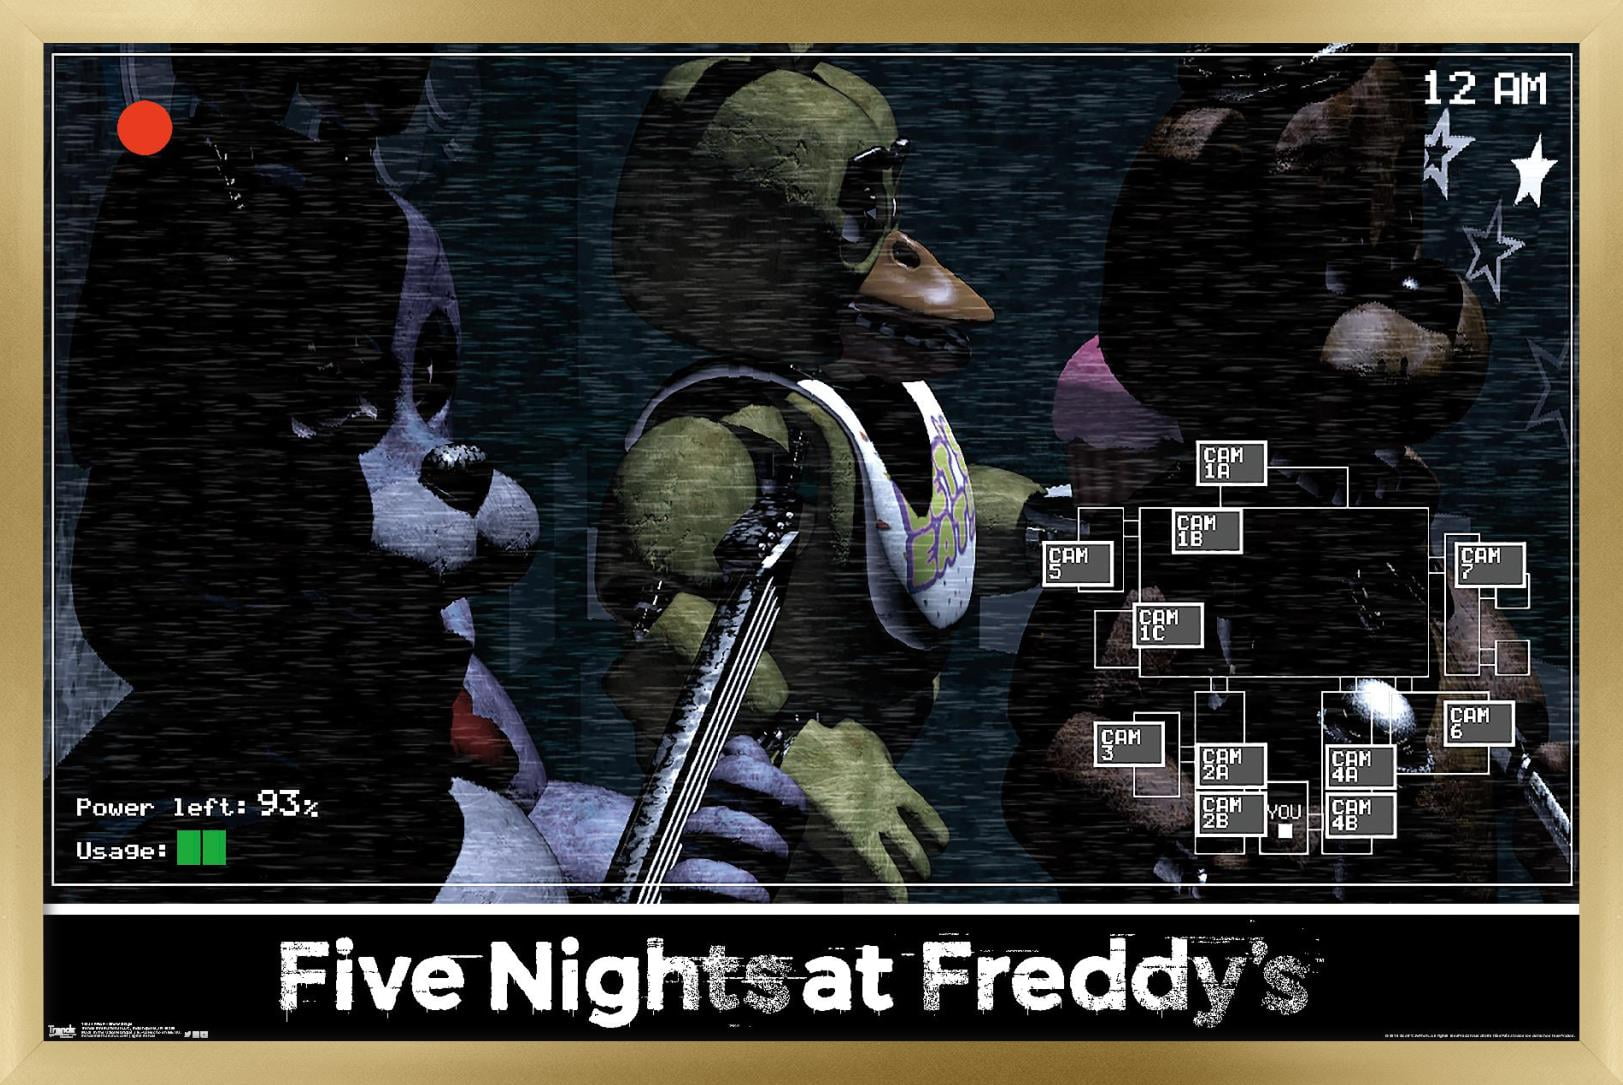 Five Nights at Freddy's - Foxy Camera Wall Poster, 22.375 x 34 